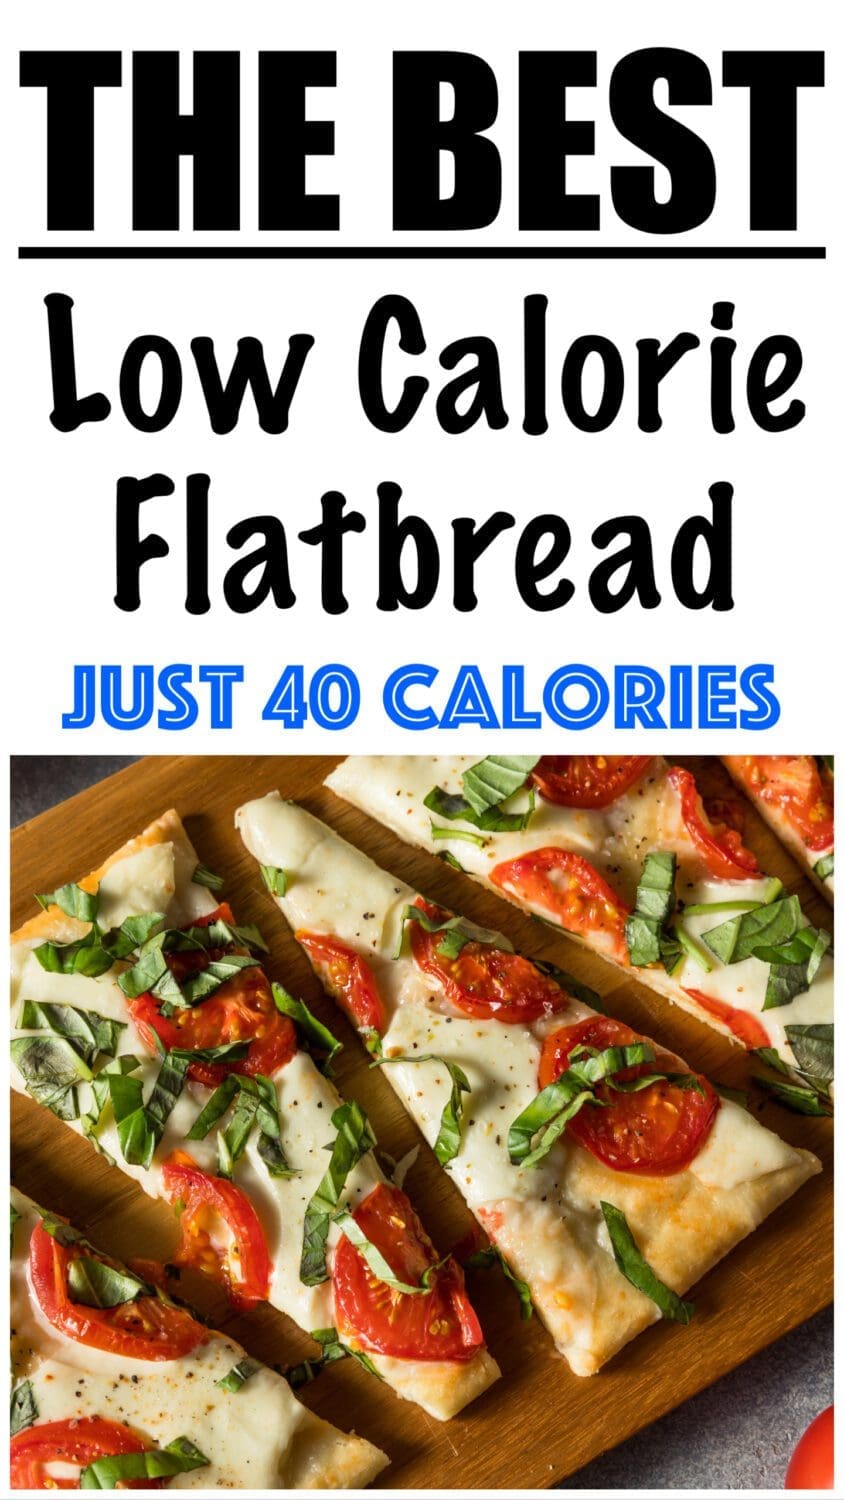 Low Calorie Flatbread